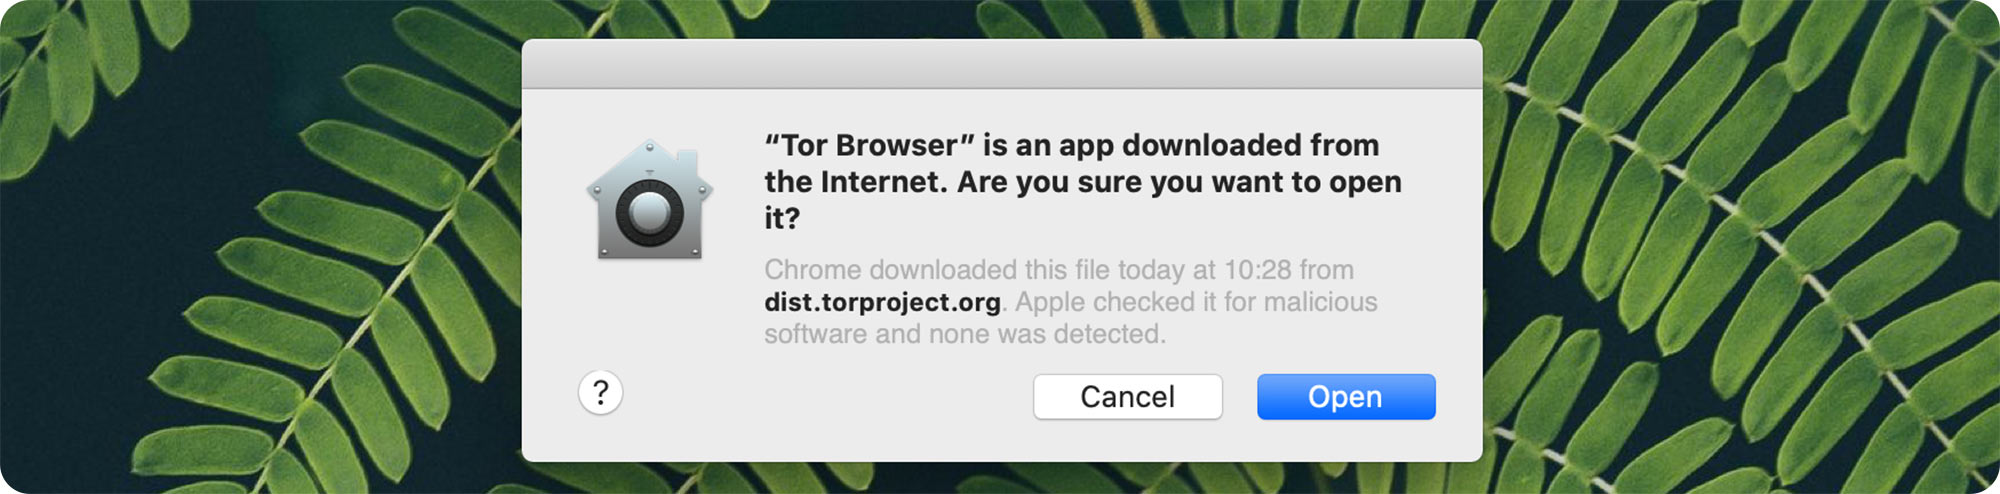 Tor browser mac os x hyrda вход signature verification failed tor browser hyrda